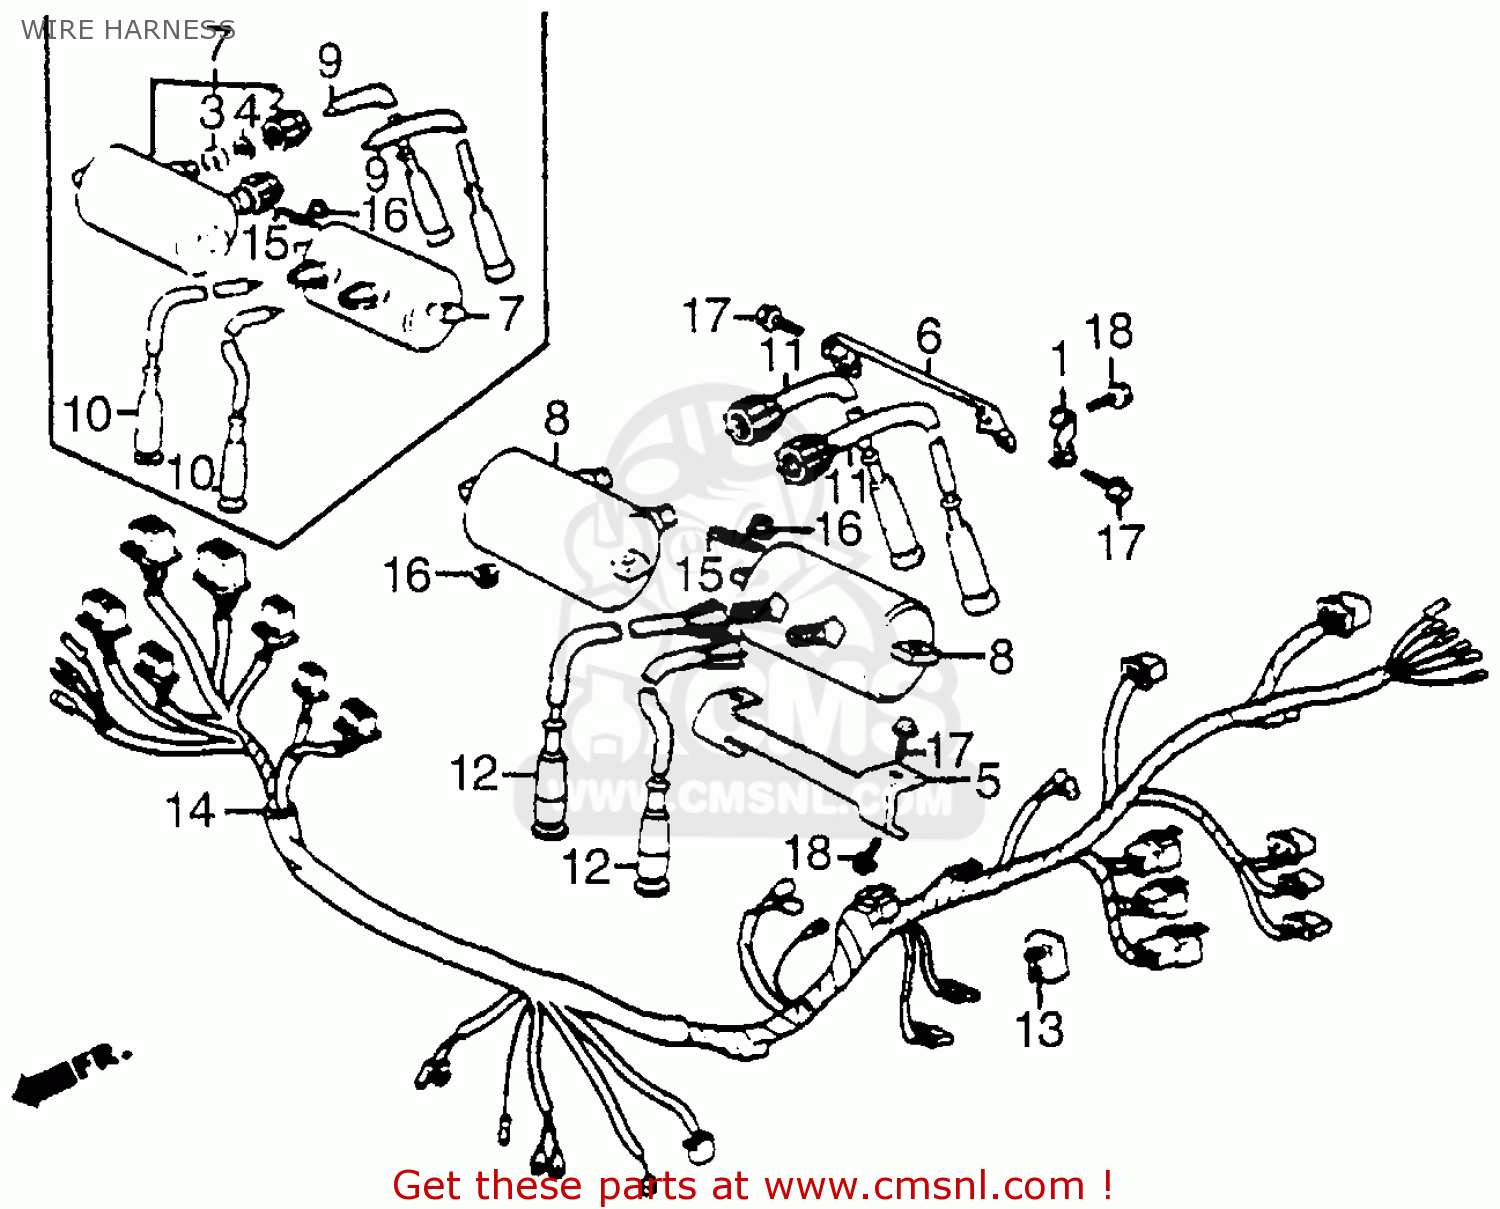 1984 Honda v30 magna wiring diagram